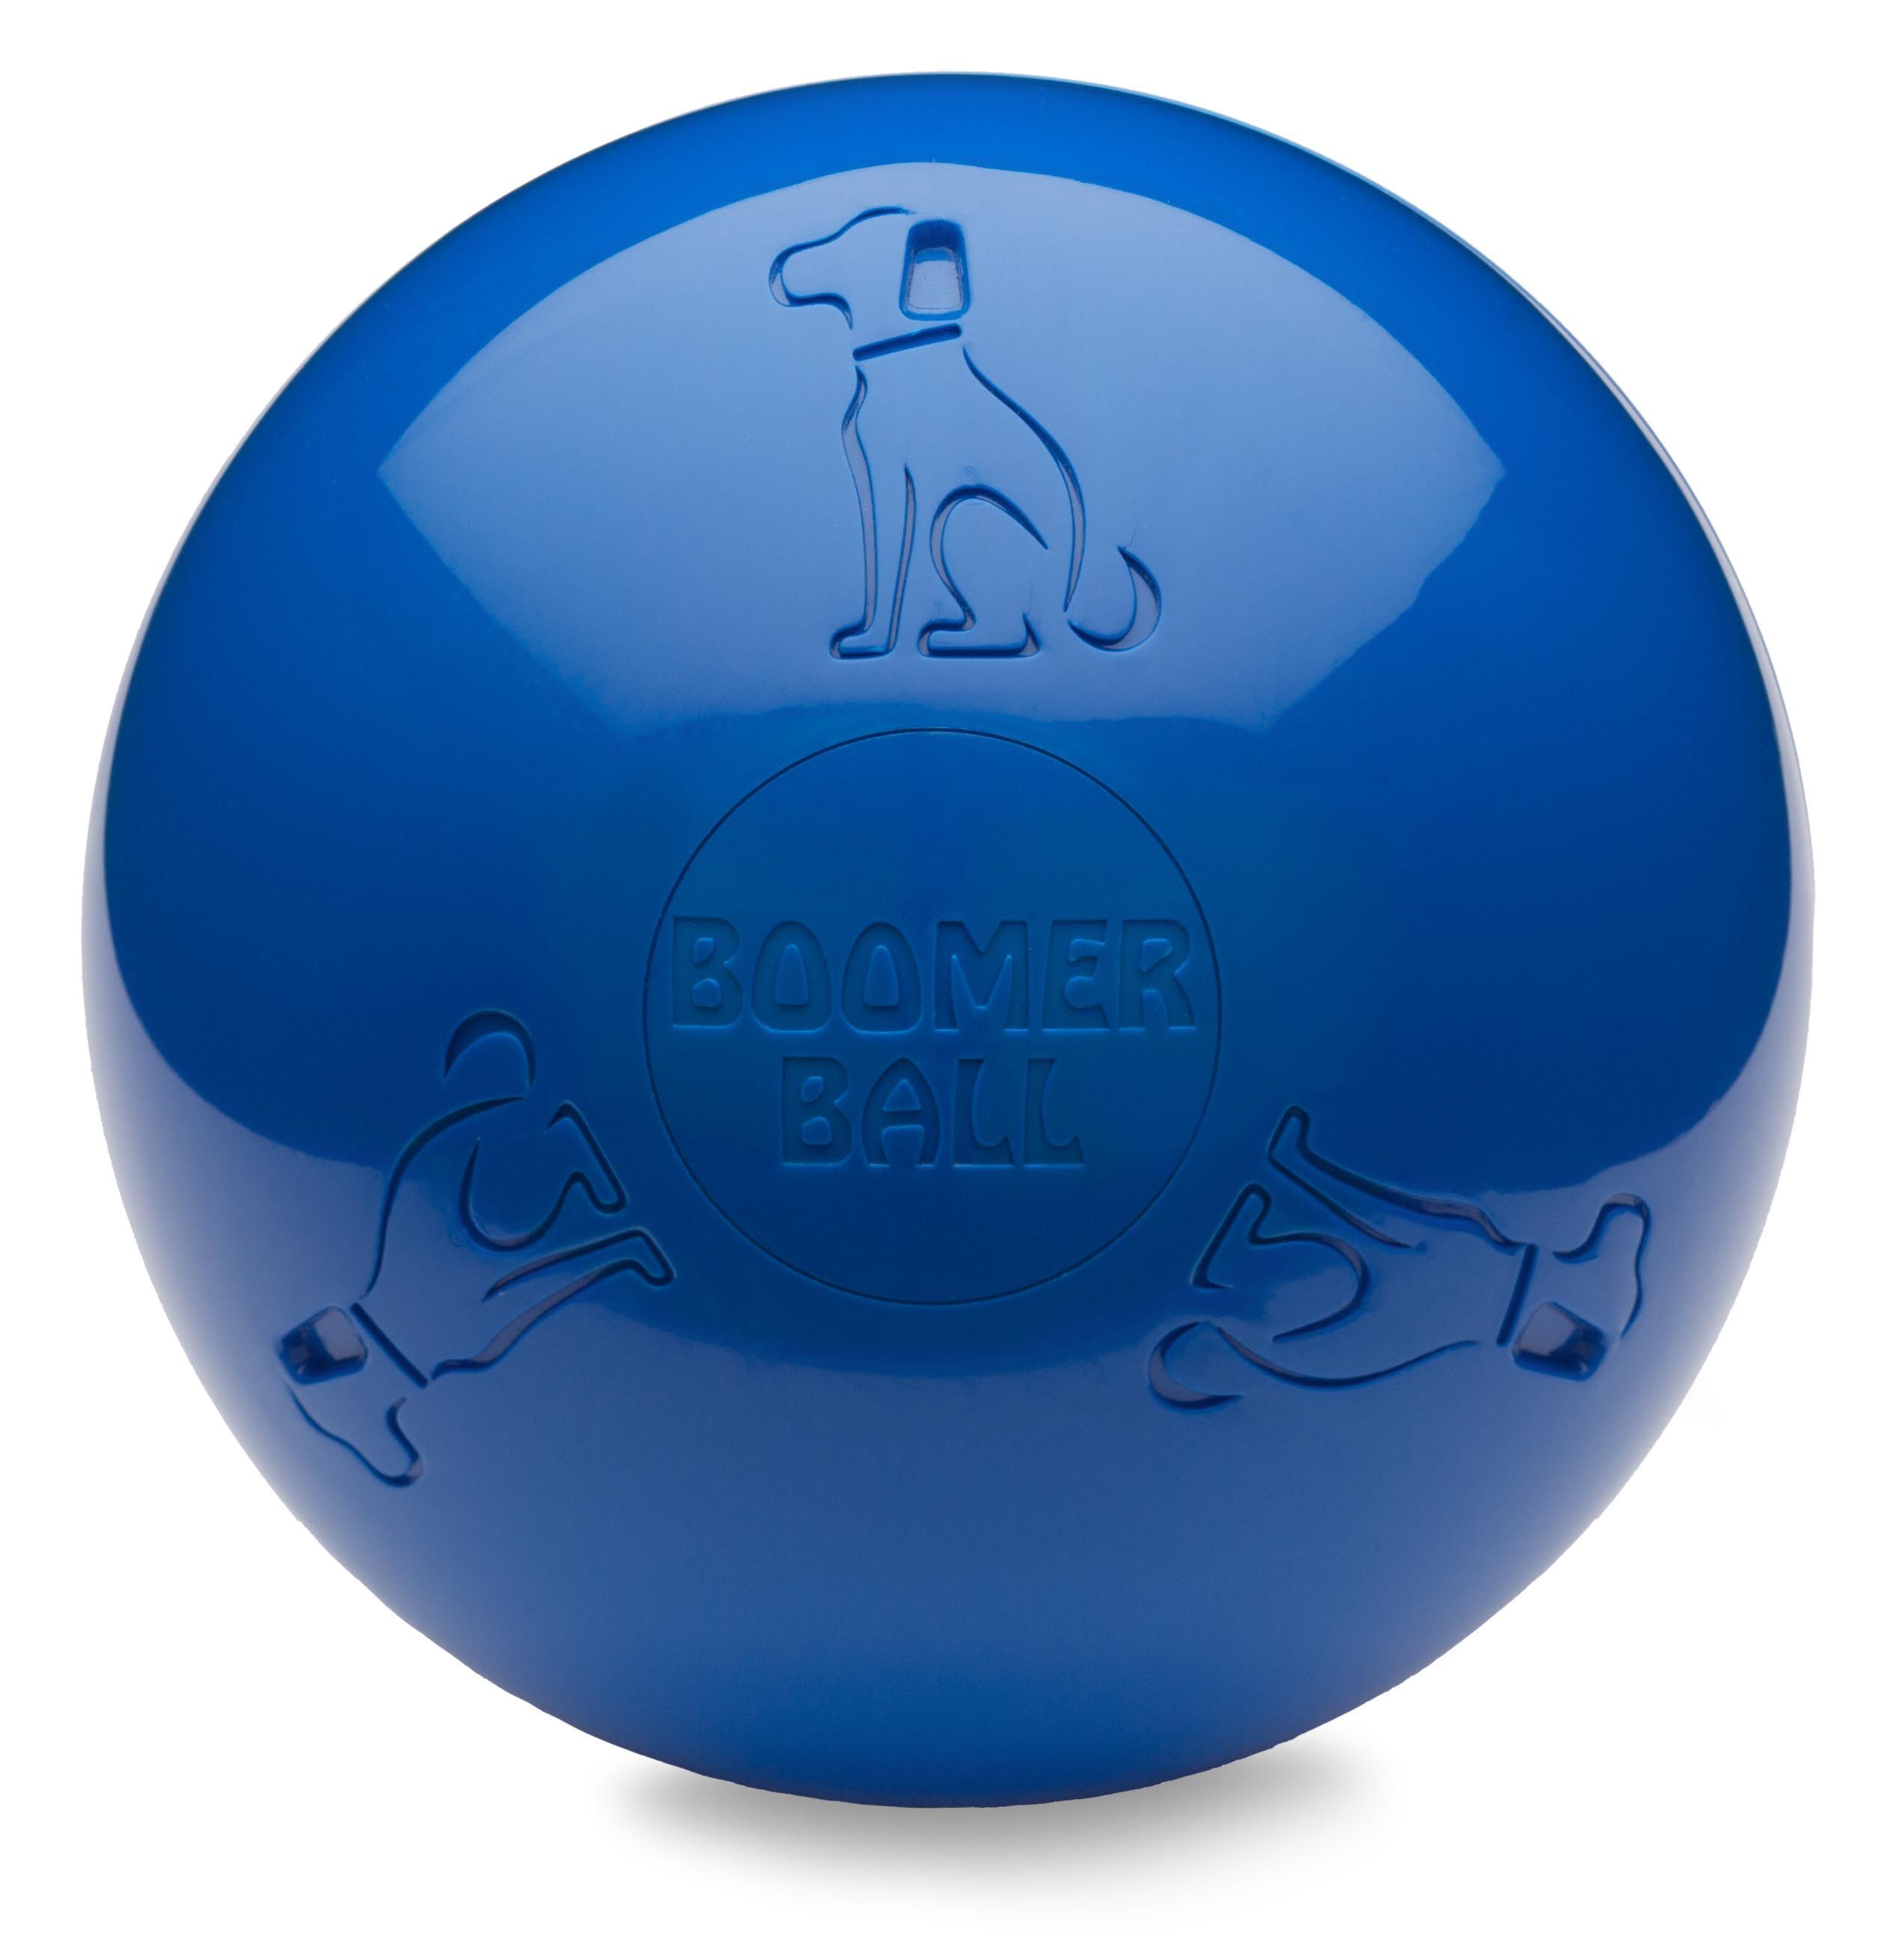 Mugford-Boomer-Ball-Hunde-Balli-kraeftig-zubeissen-RM-TB03